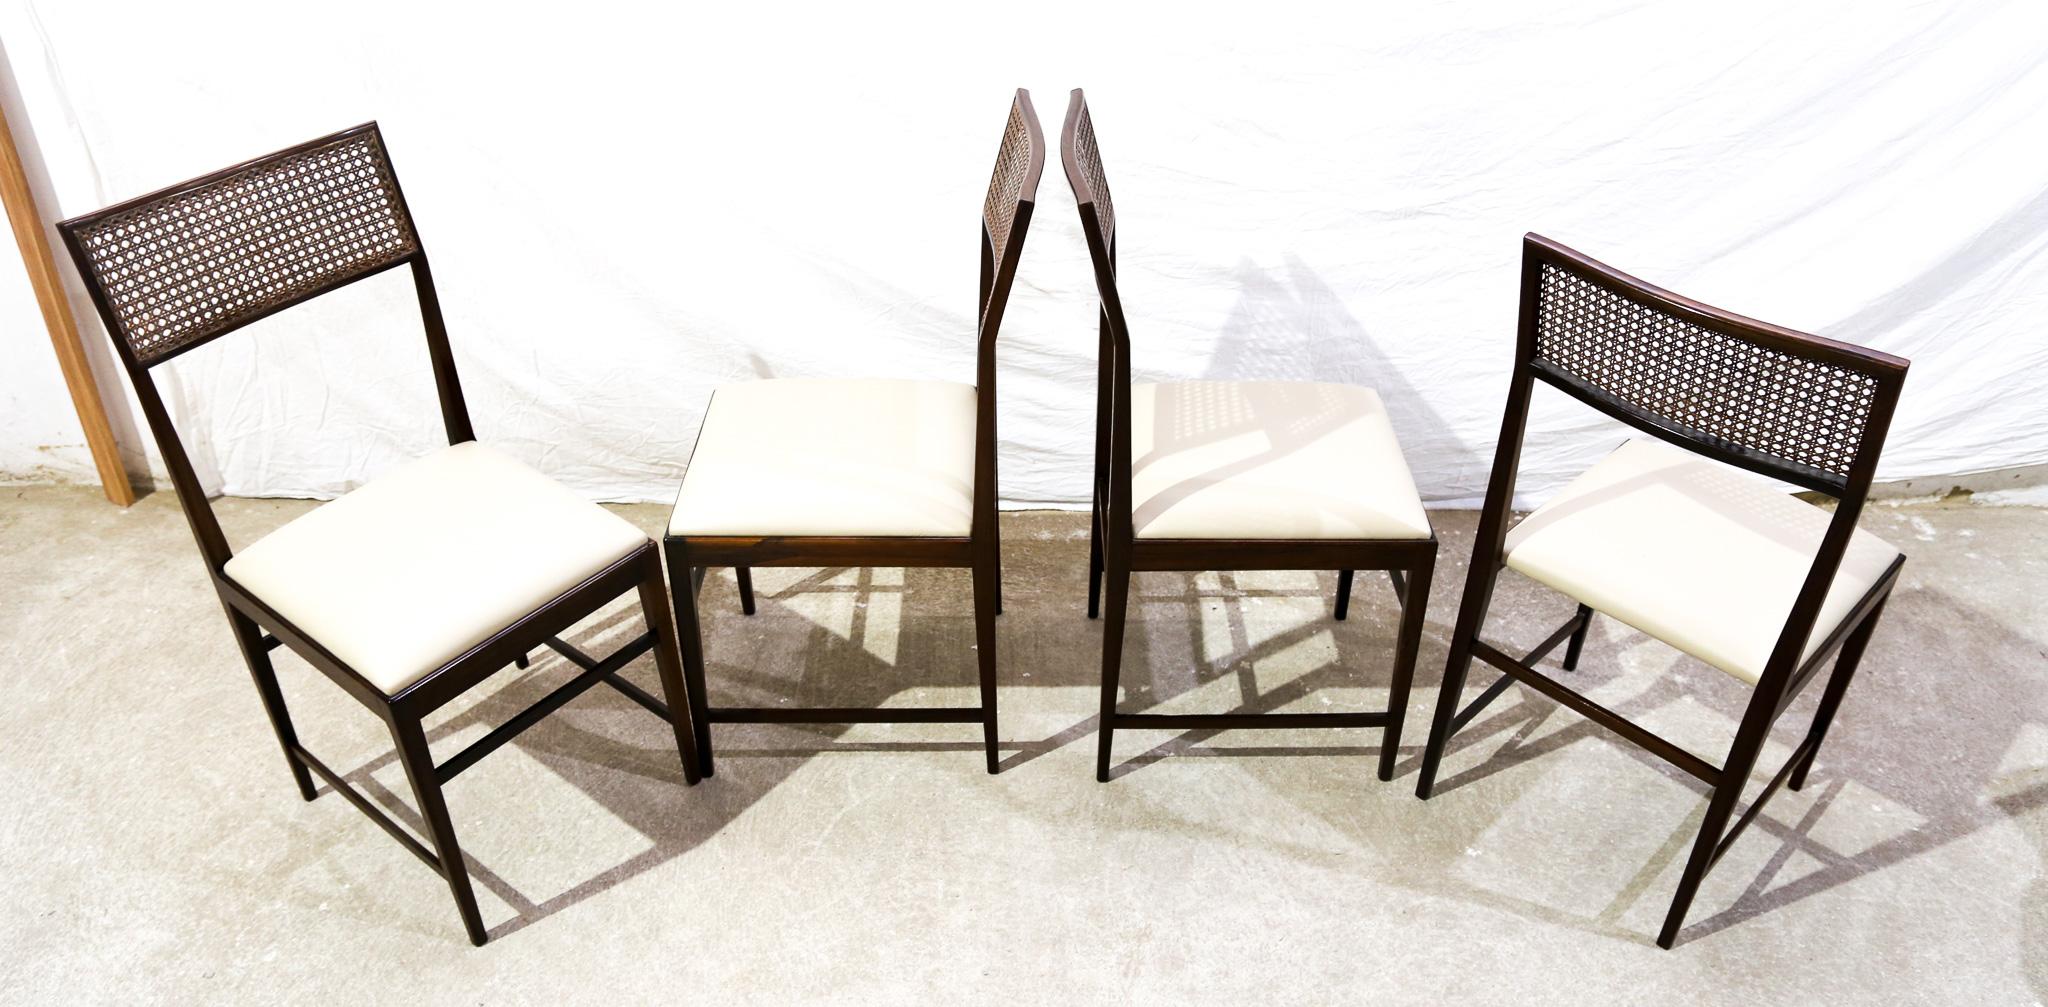 Brazilian Modern 4 Chair Set in Hardwood, Cane, Leather, Joaquim Tenreiro 1950s For Sale 5